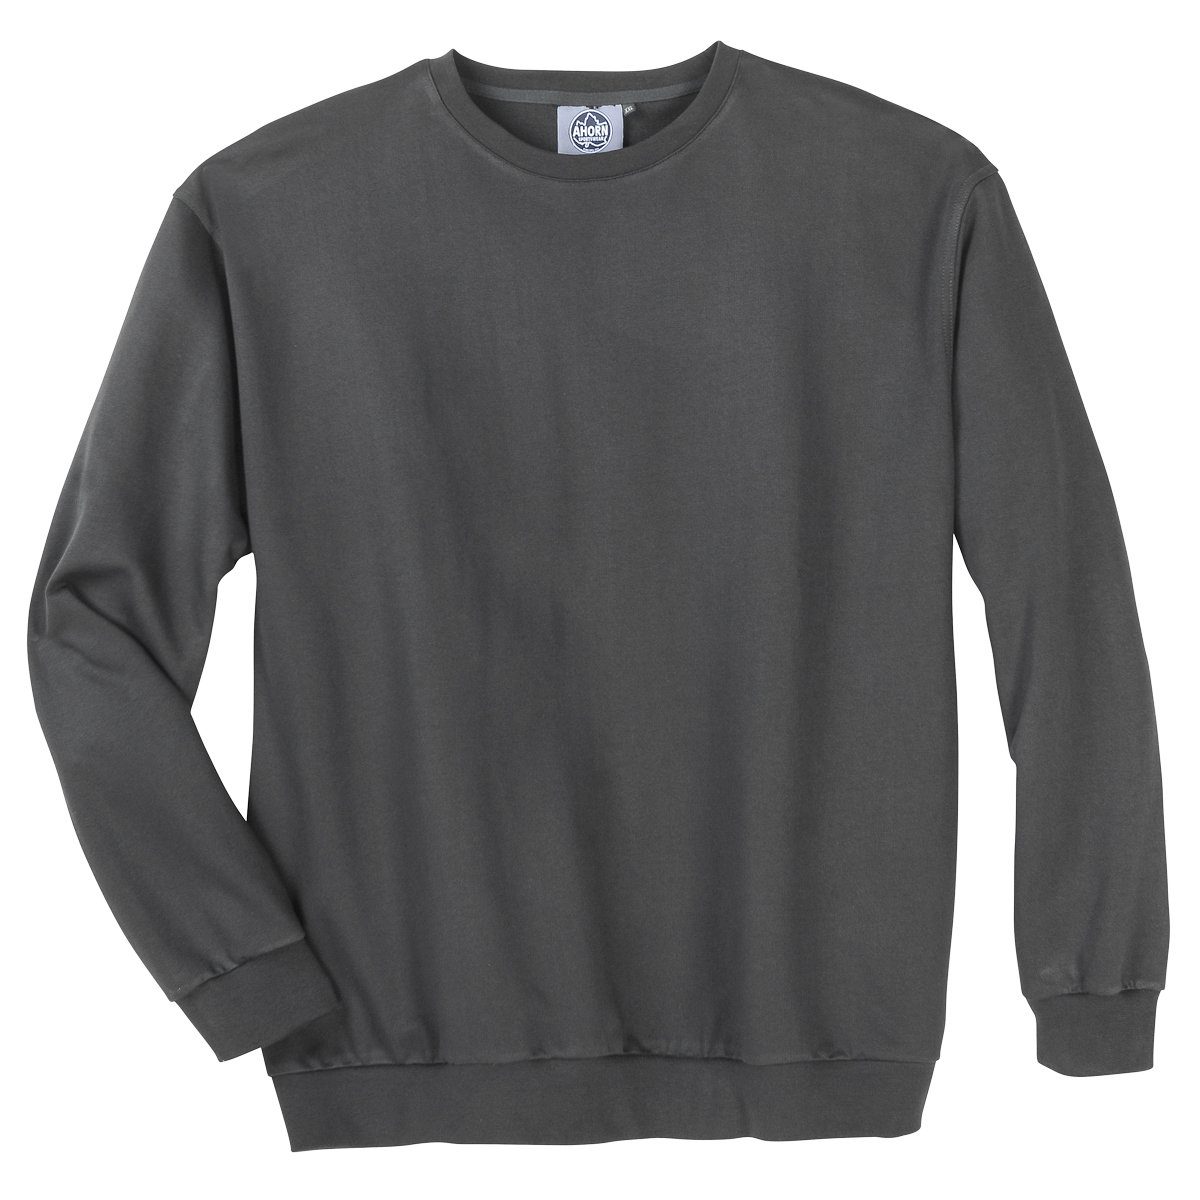 AHORN SPORTSWEAR Sweater Übergrößen Basic-Sweatshirt dunkelgrau Ahorn  Sportswear